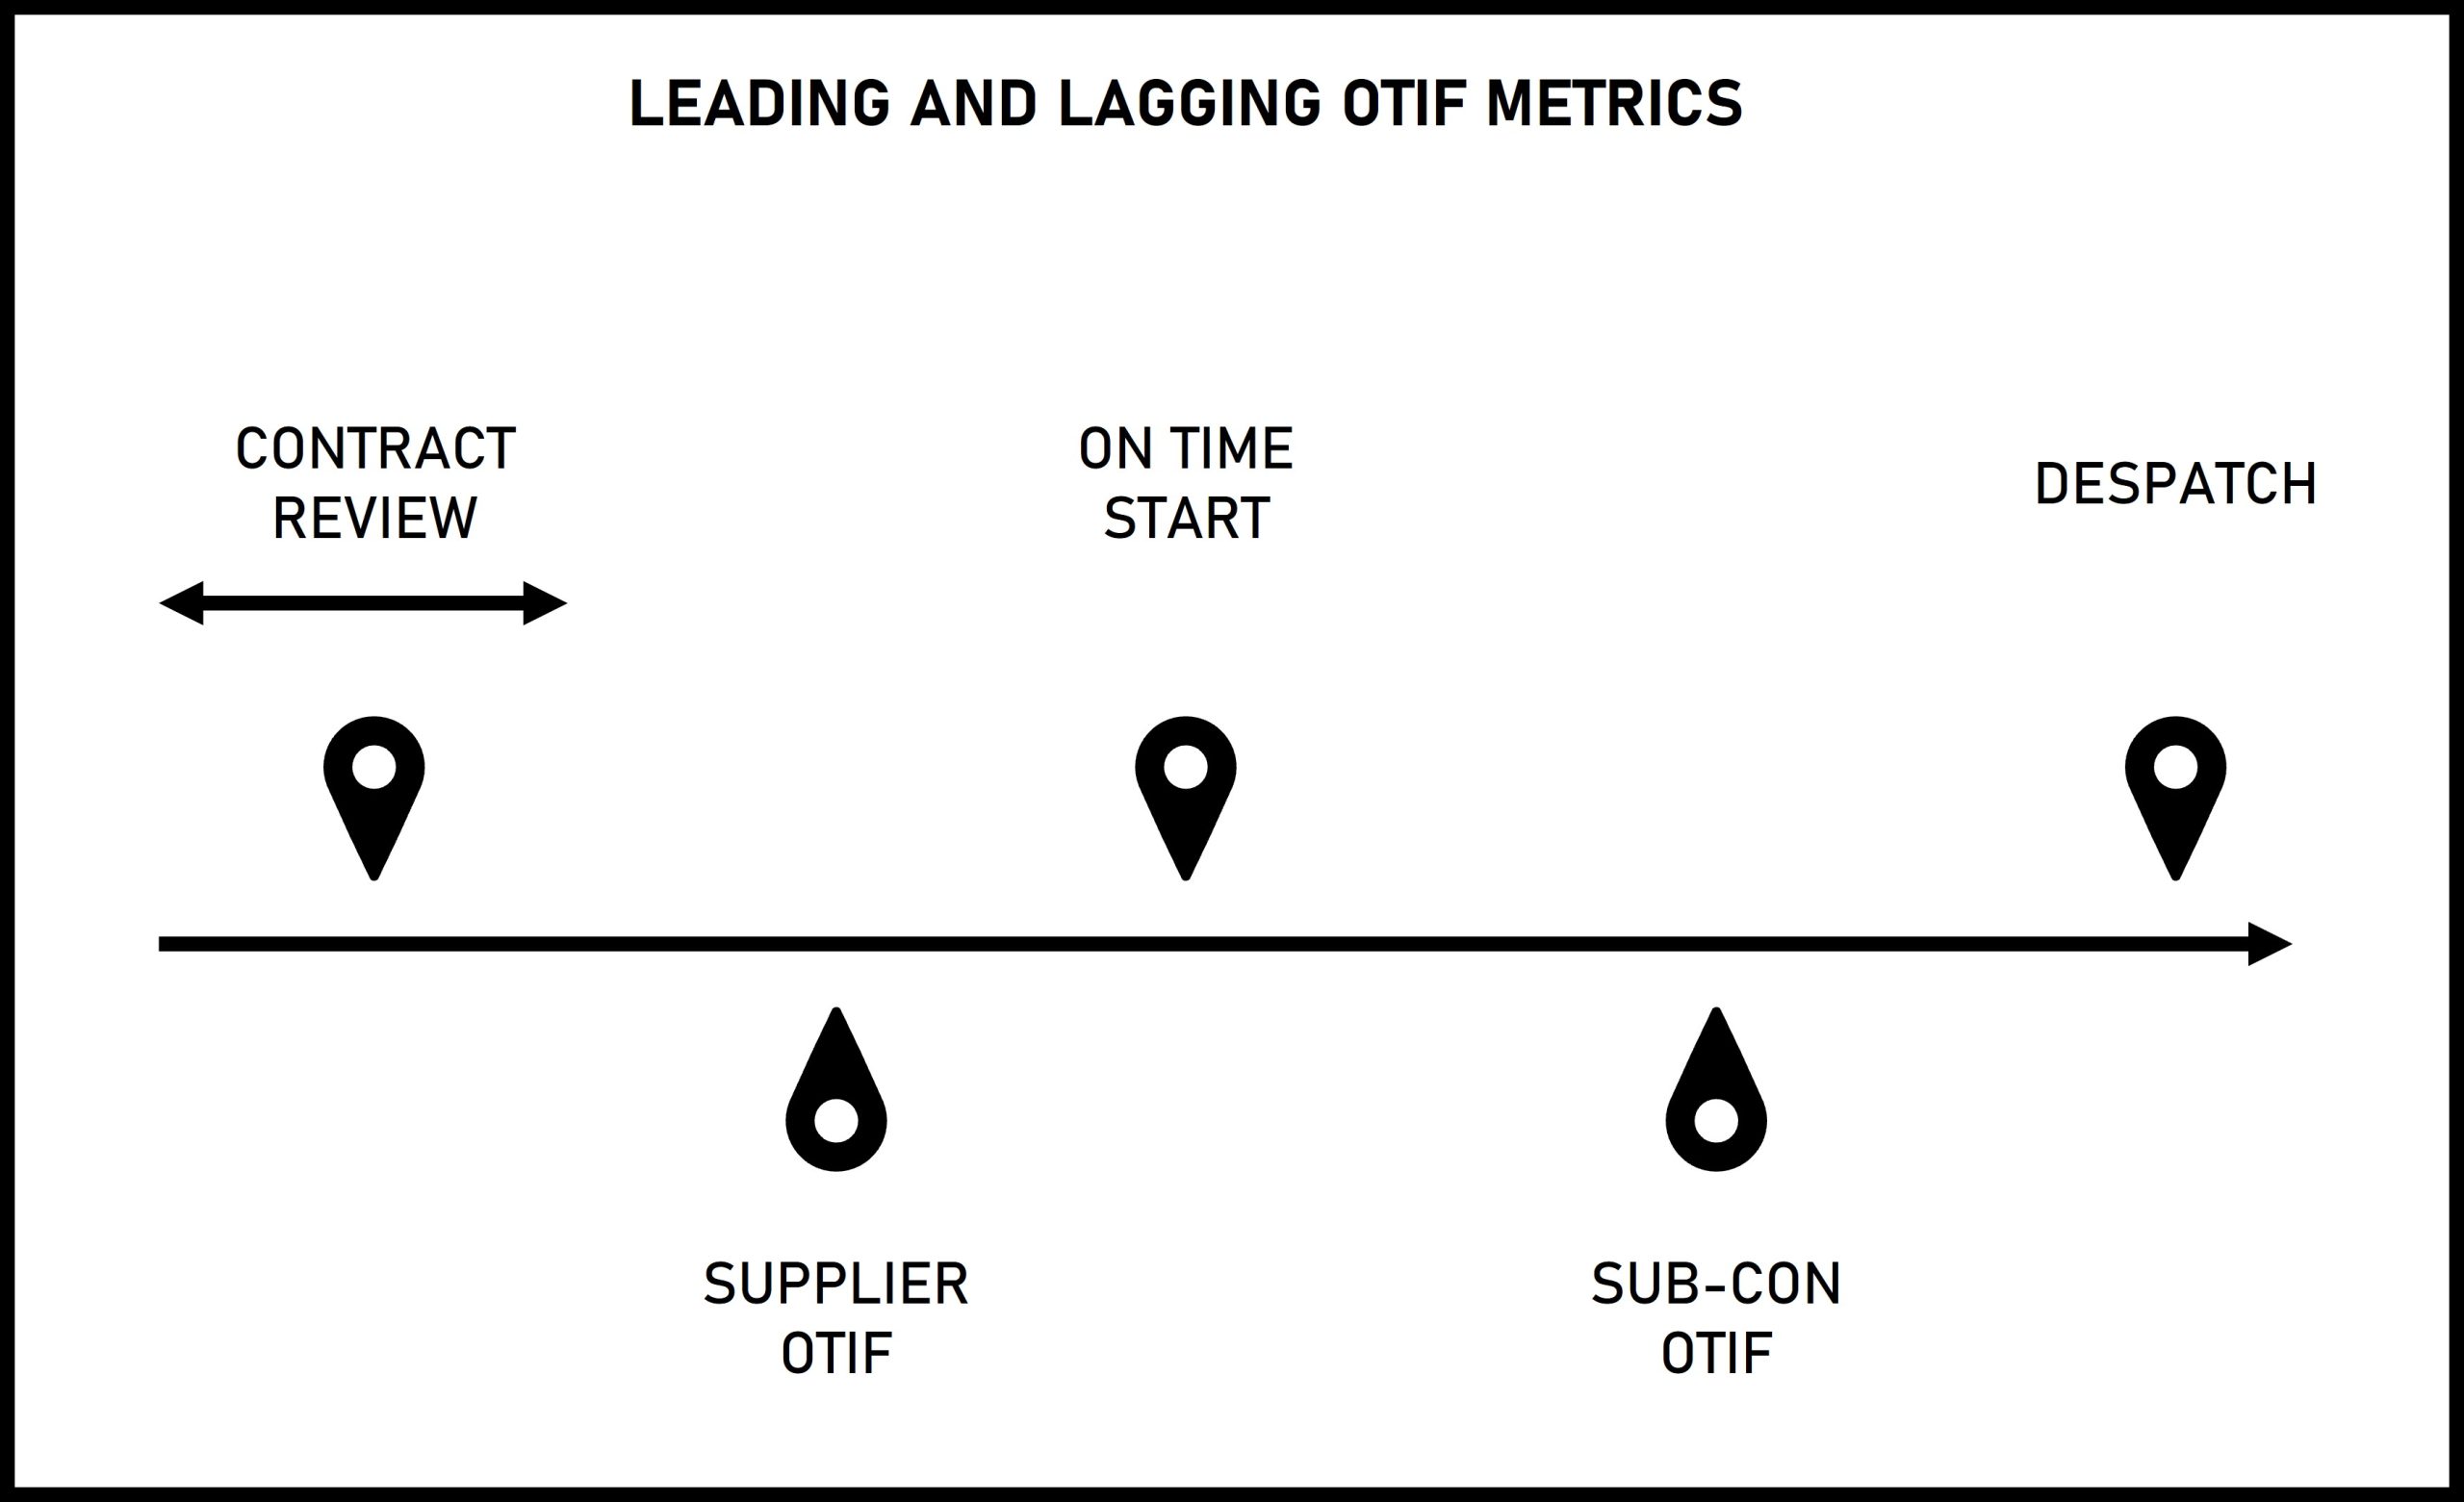 Using OTIF metrics to drive change